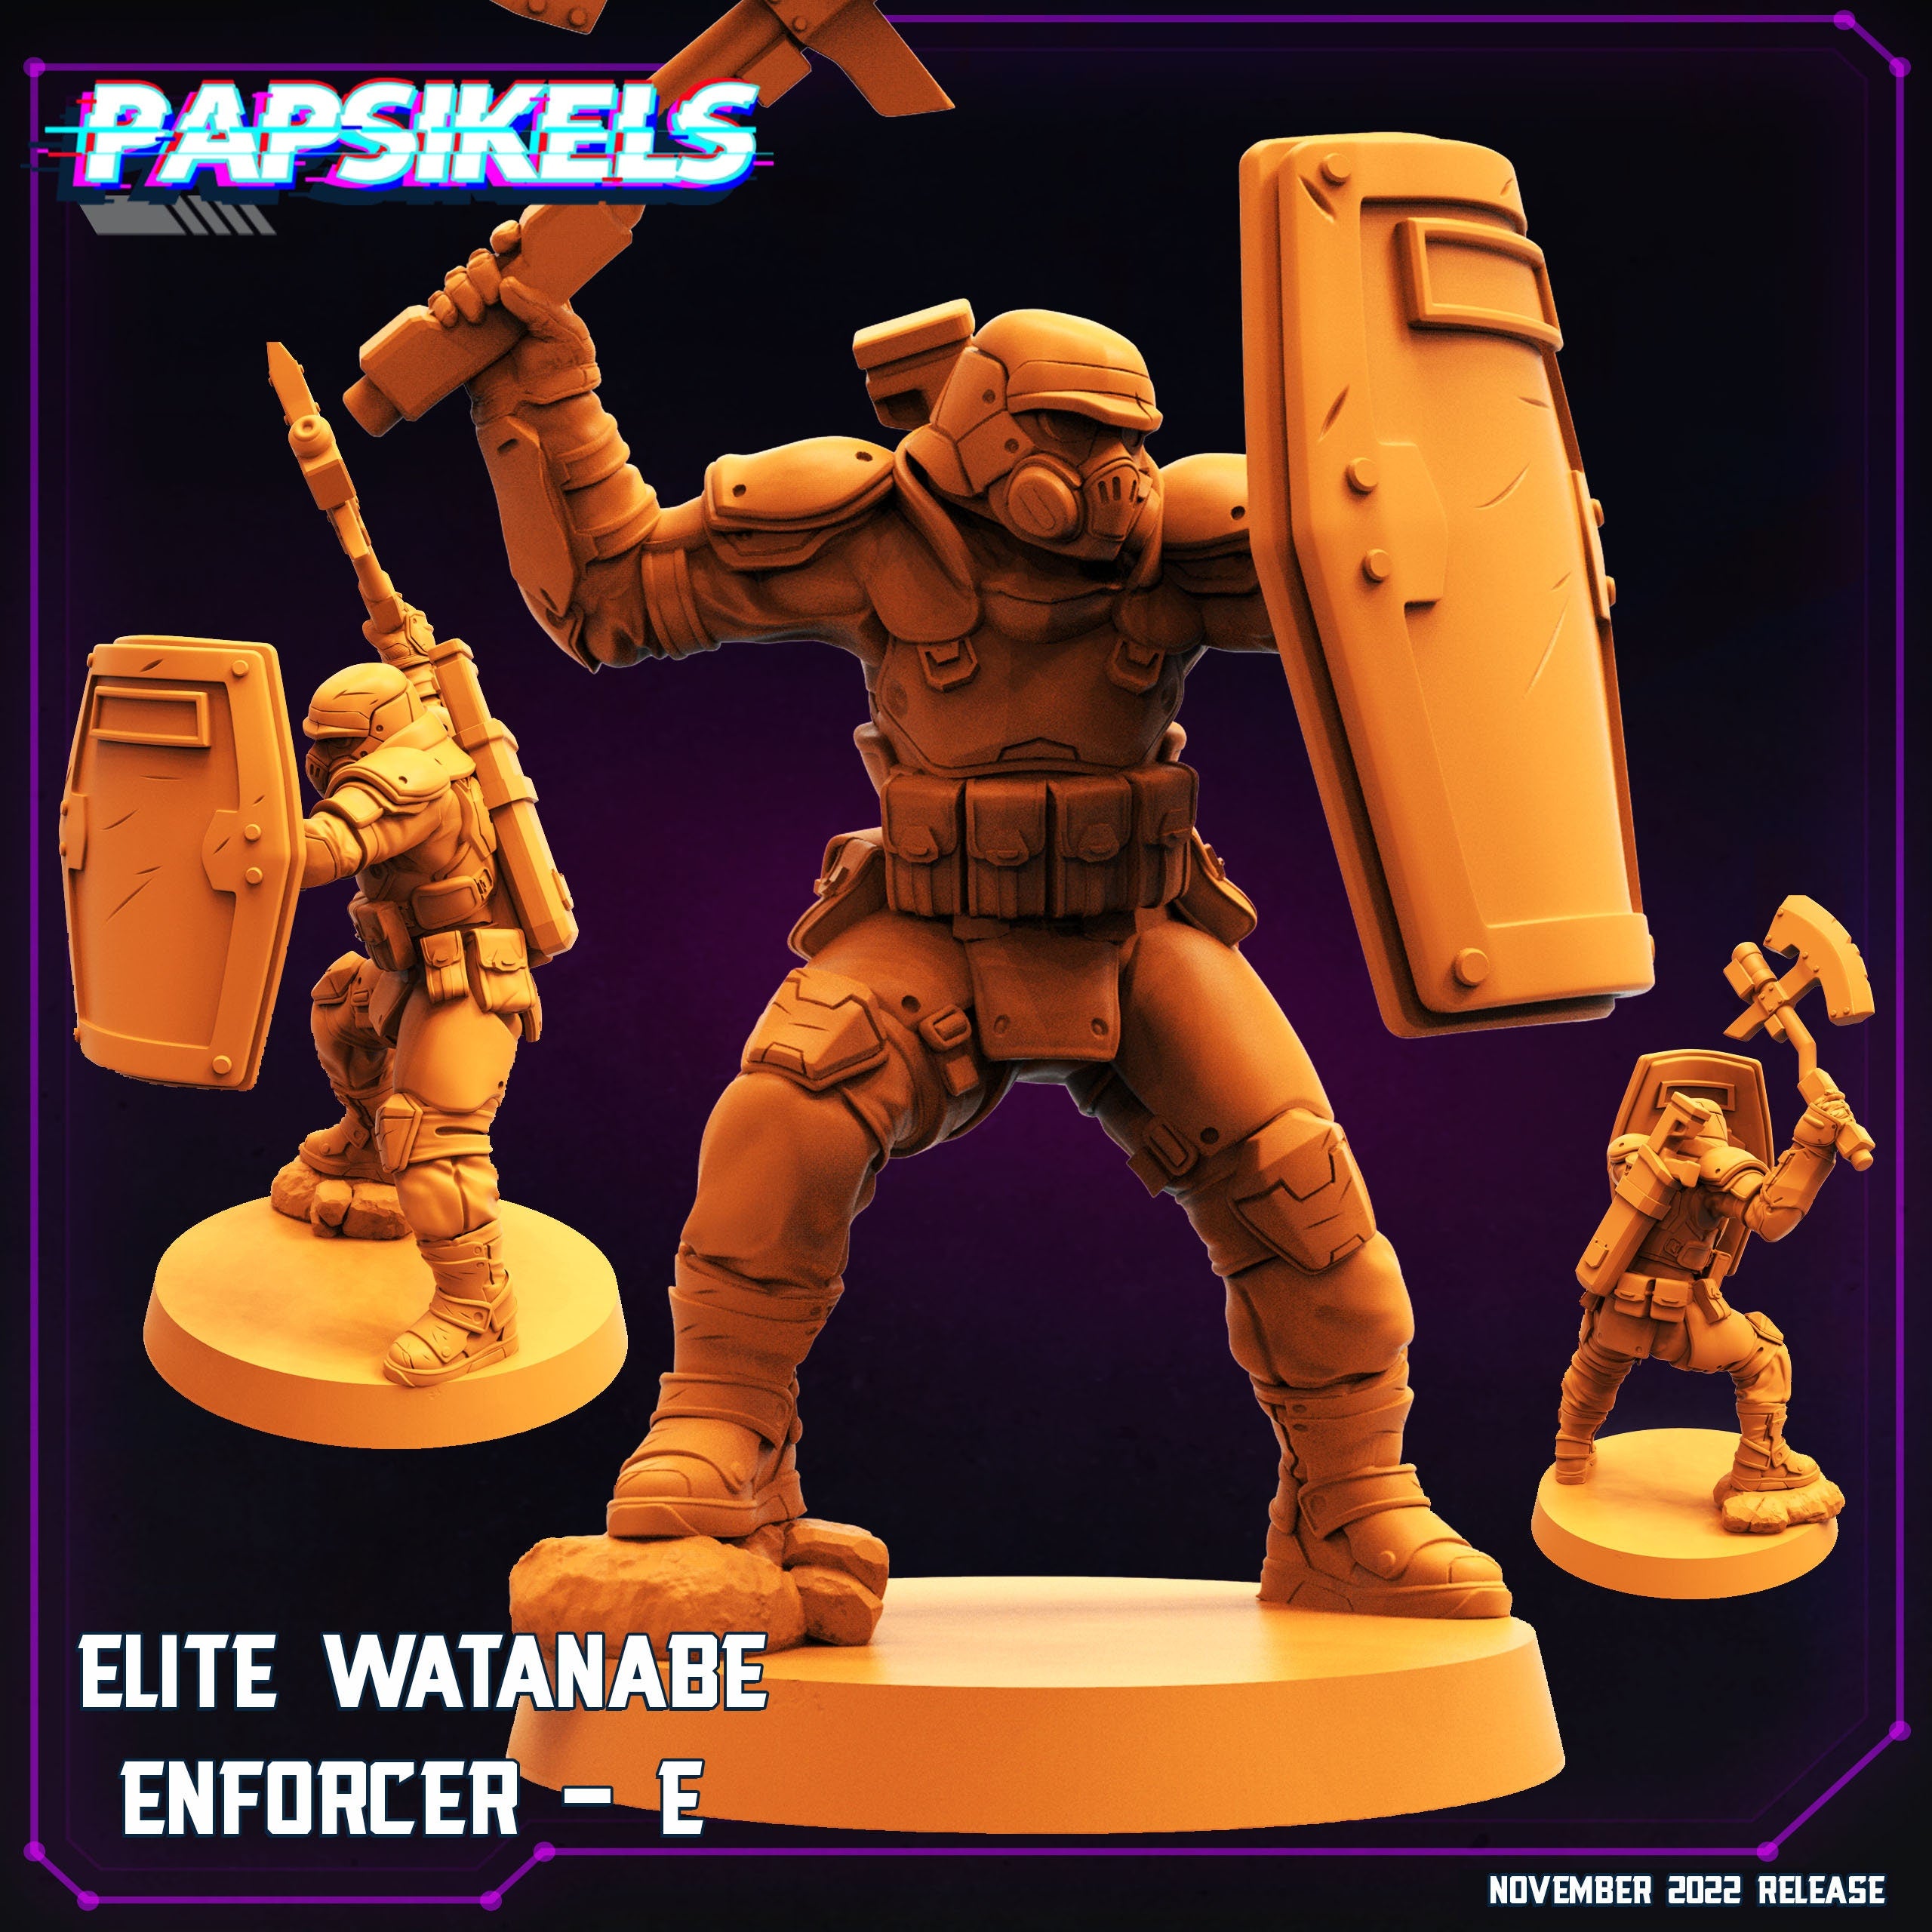 5 x Cyberpunk Elite Wantanbe Enforcers